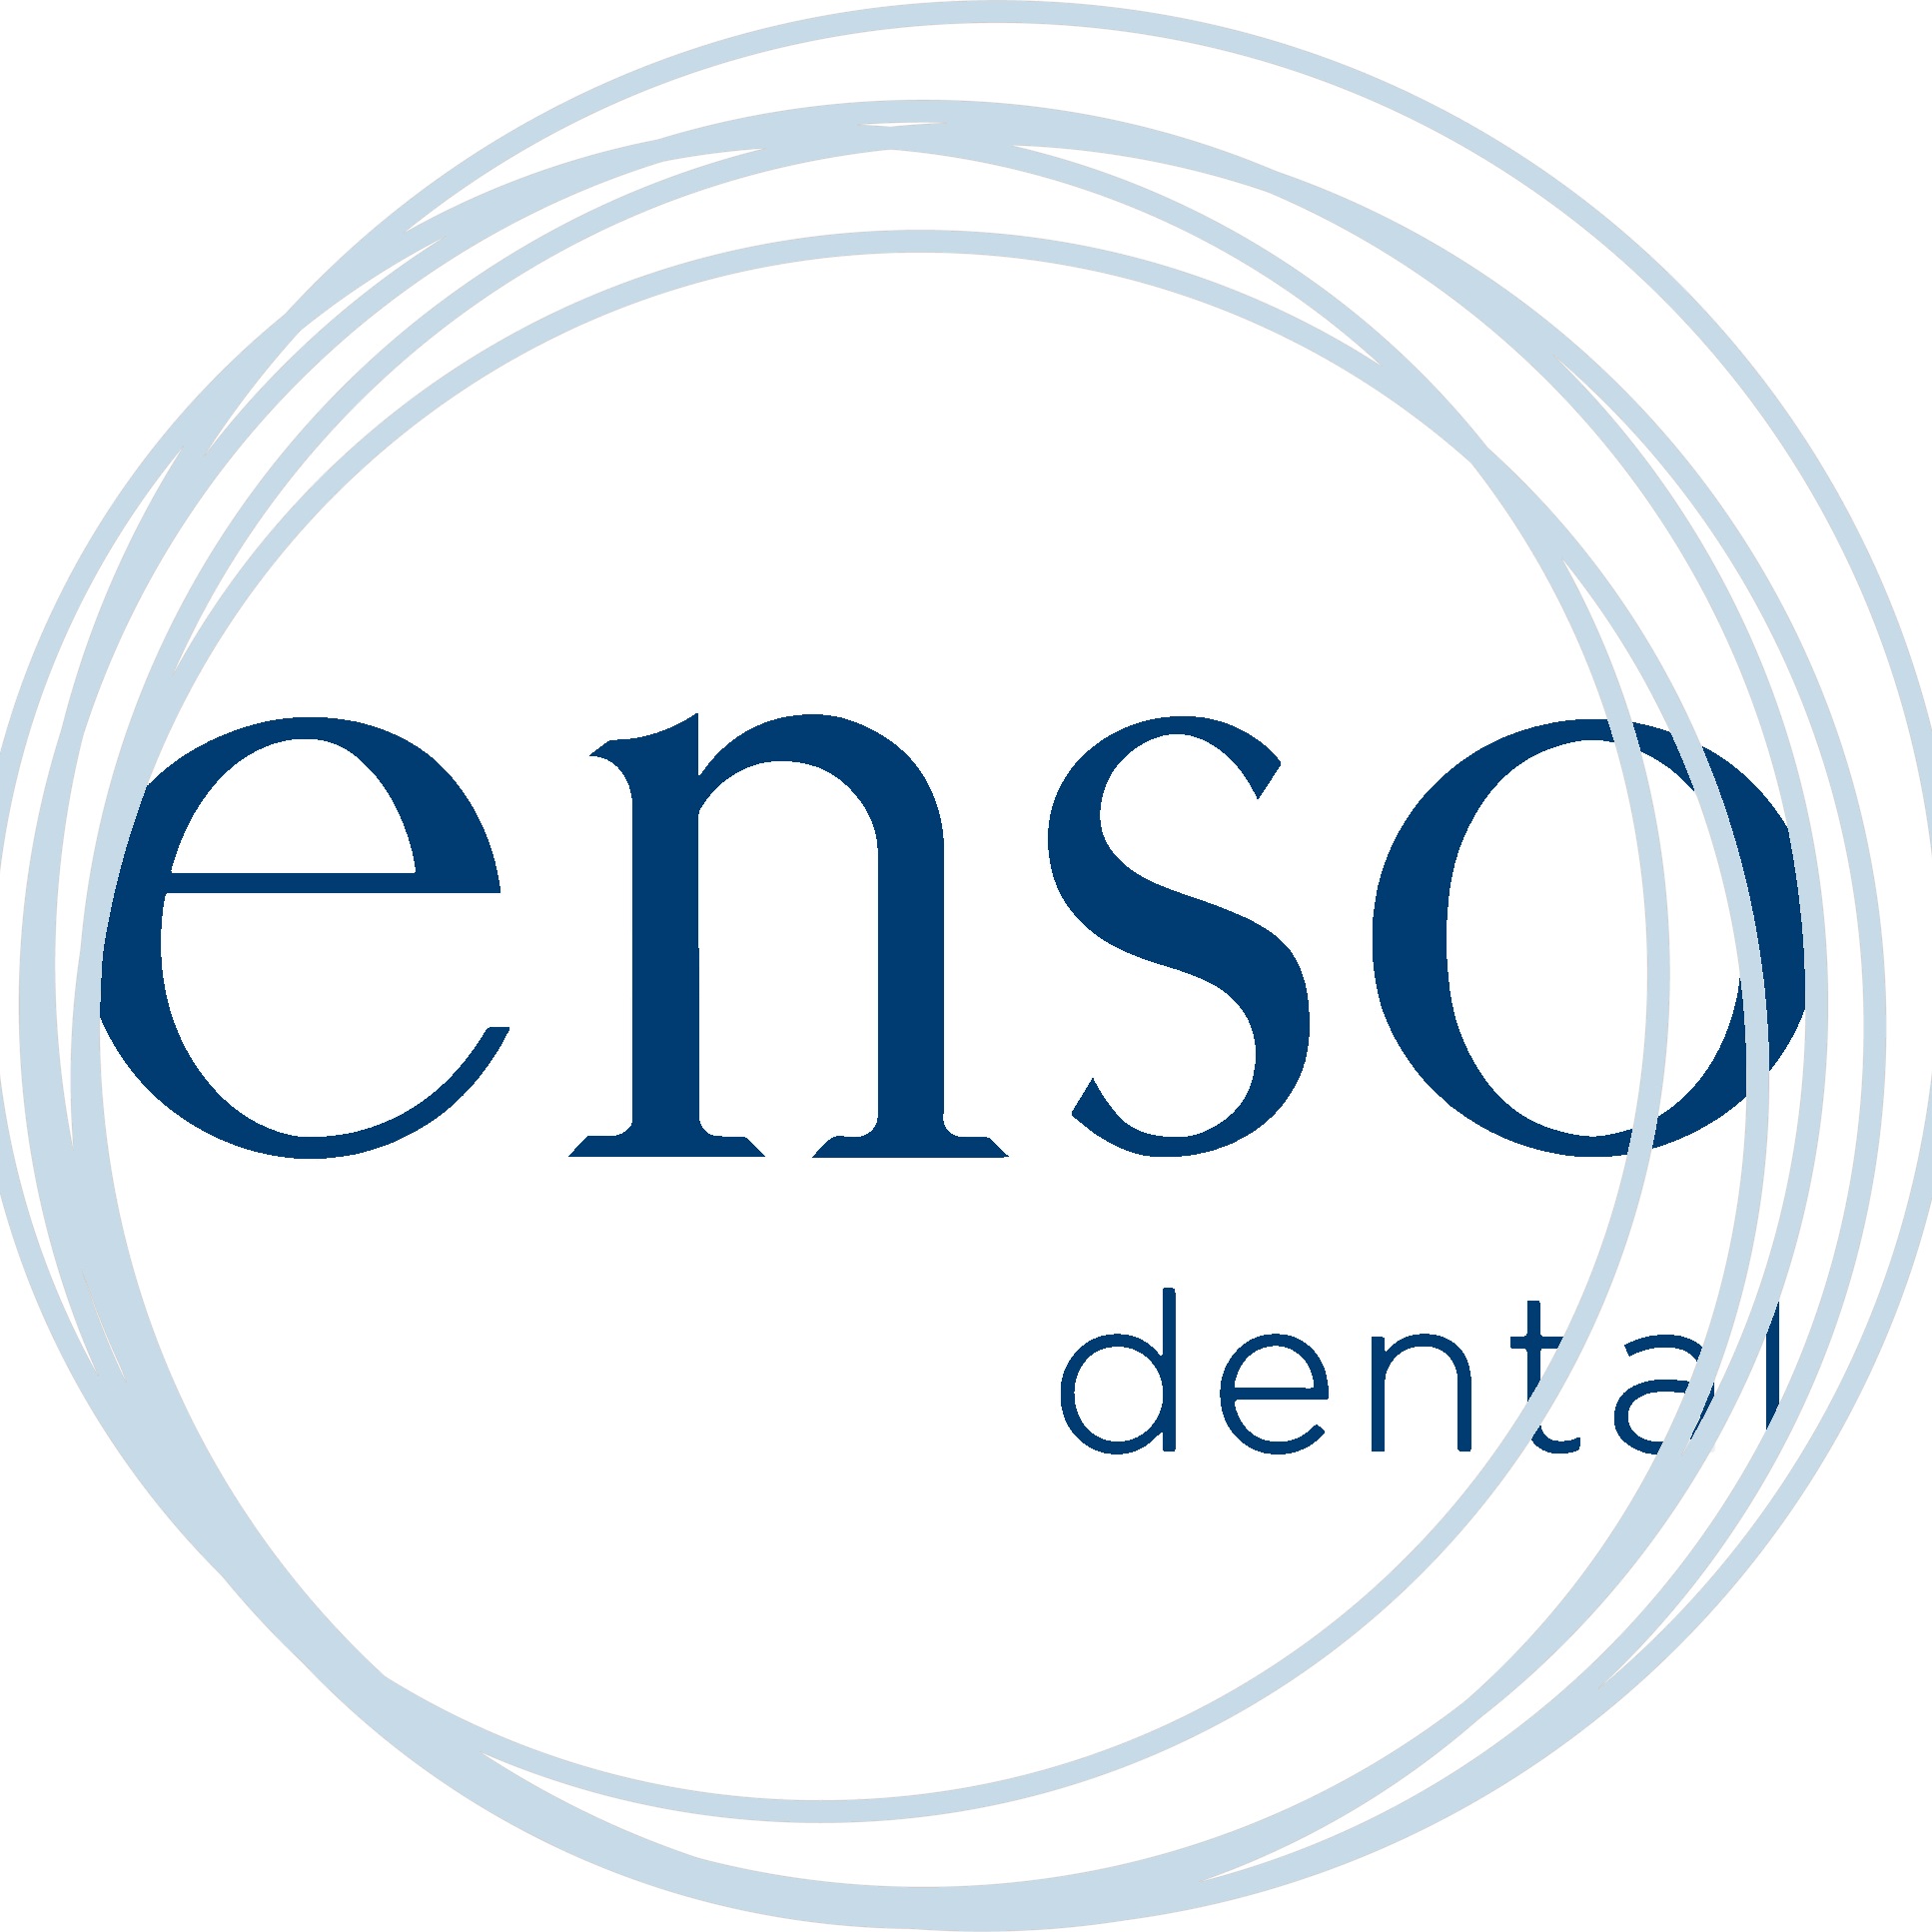 Enso Dental North Perth